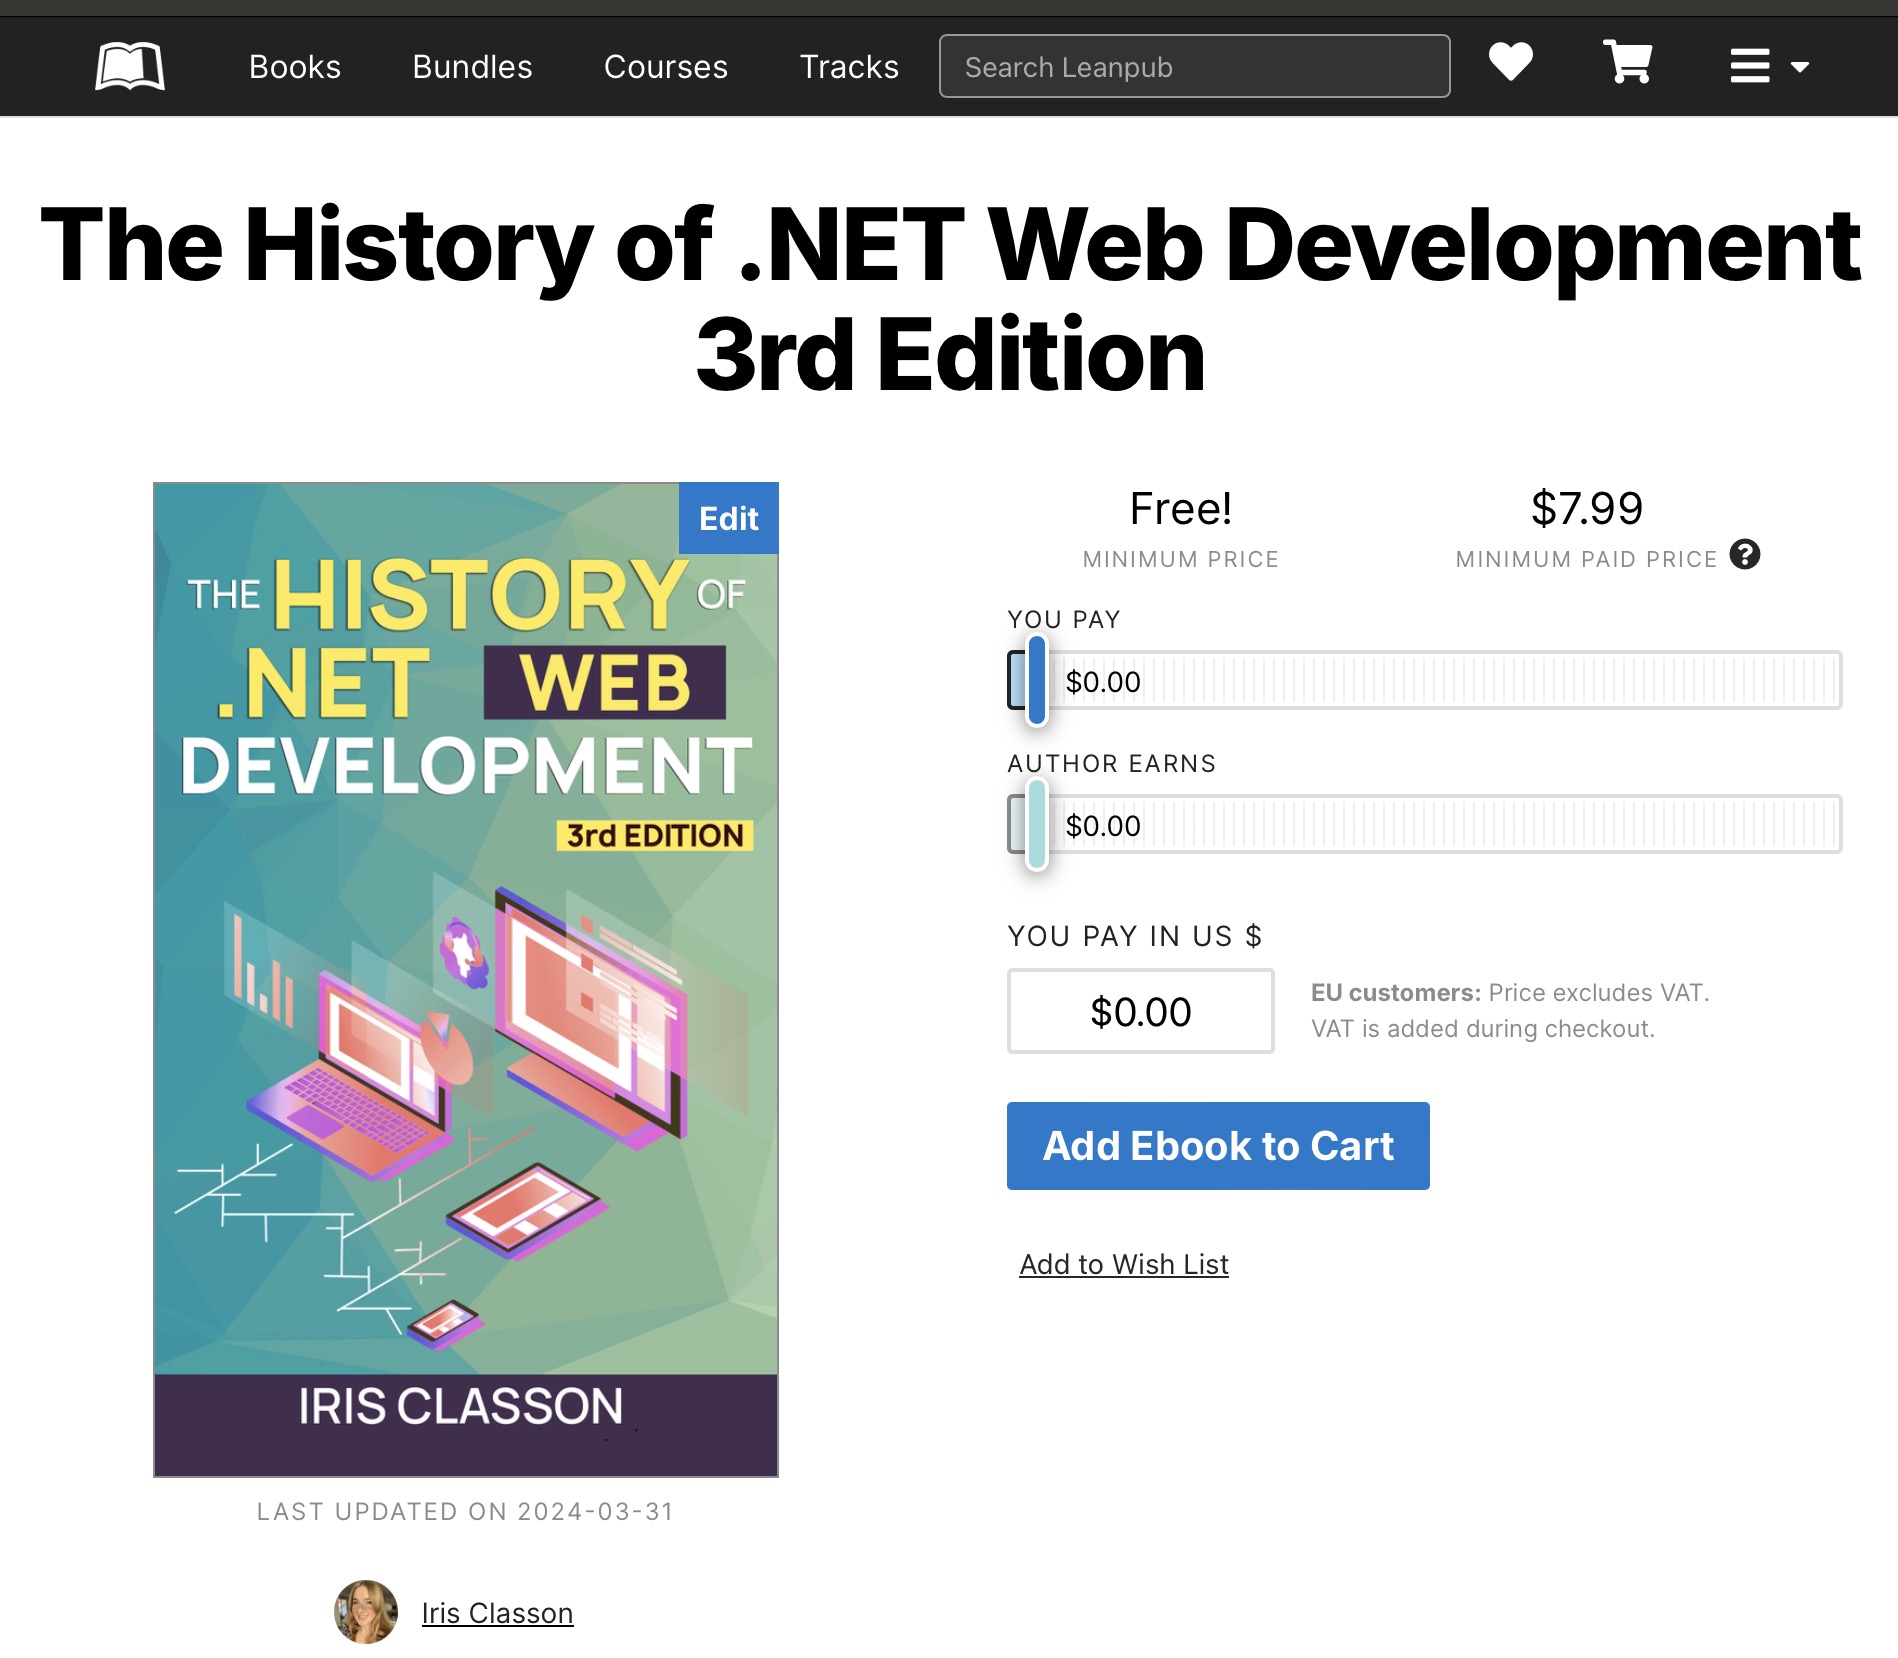 The History of .NET Web Development 3rd Edition